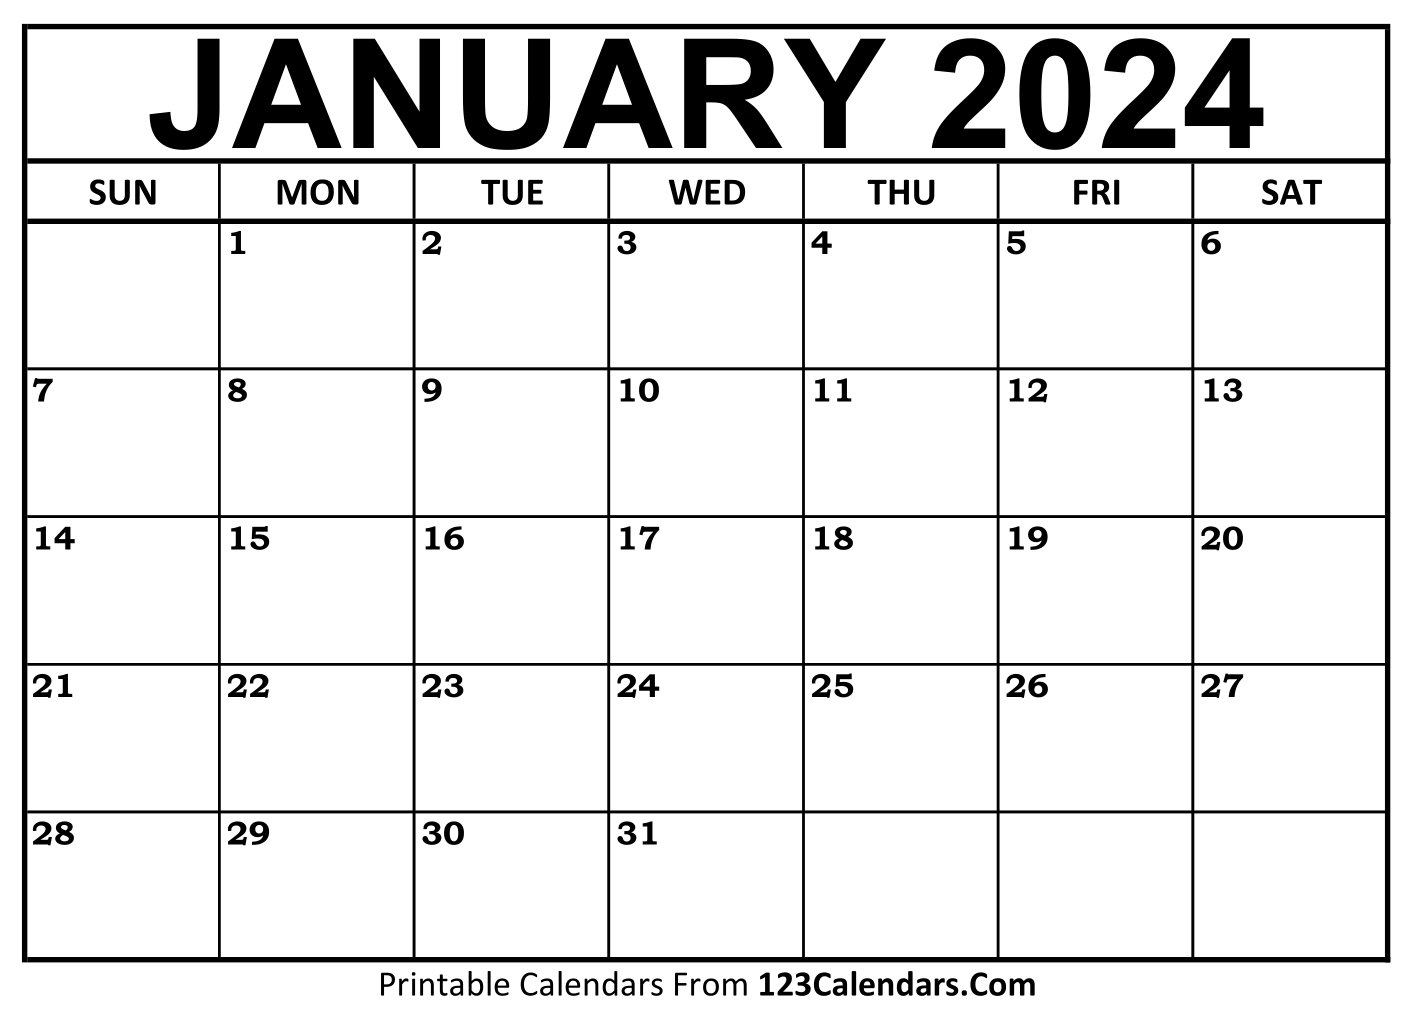 Printable January 2024 Calendar Templates - 123Calendars | January 2024 Calendar Month